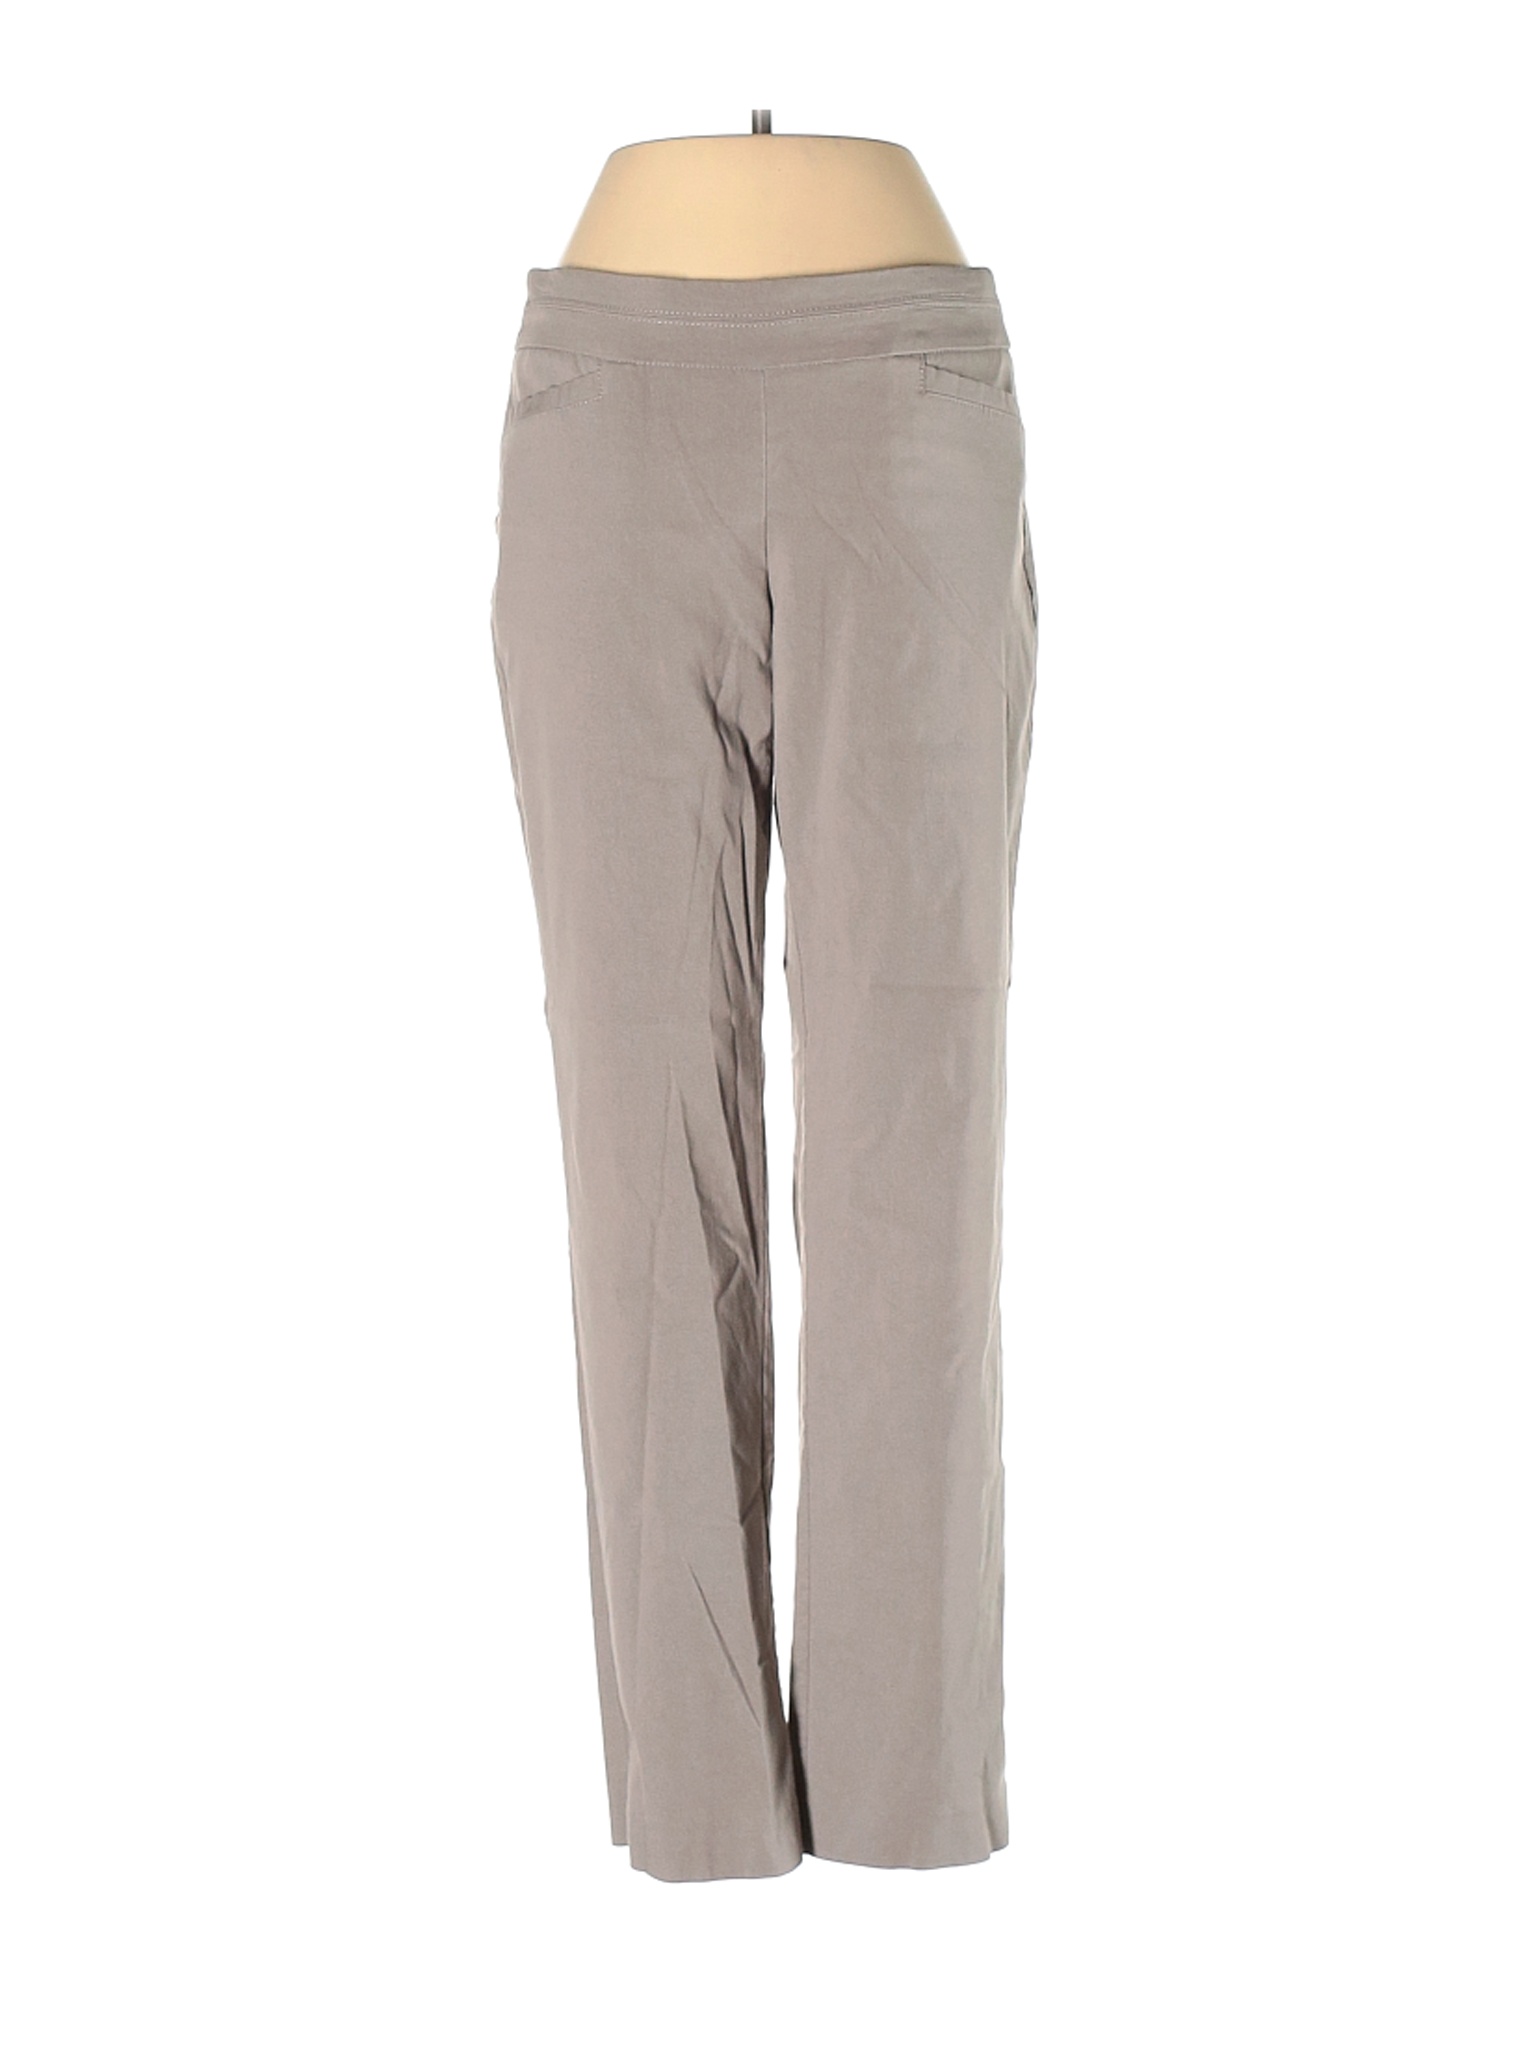 Apt. 9 Women Gray Dress Pants 4 | eBay